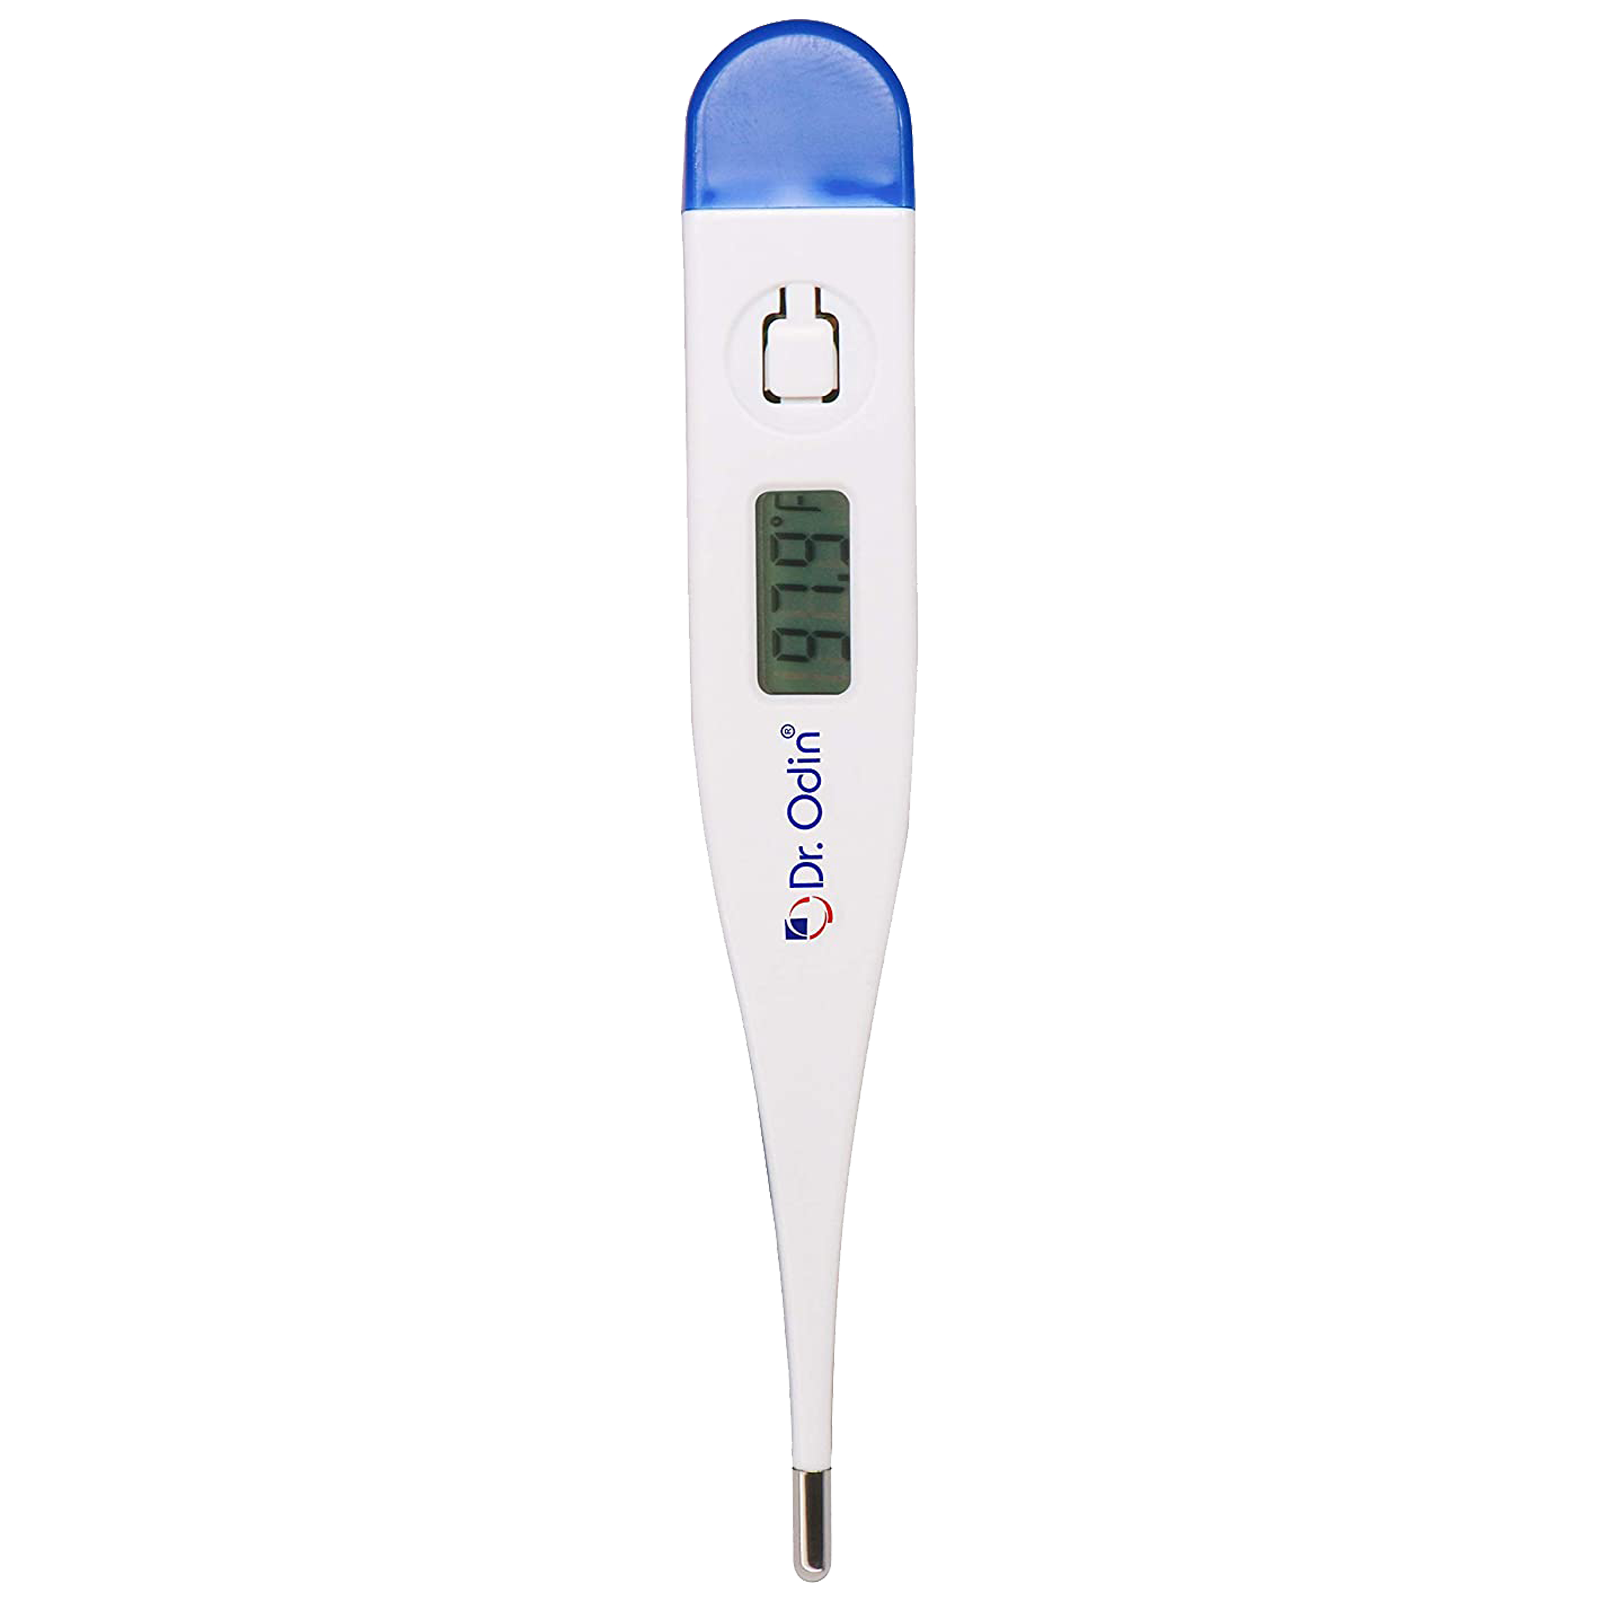 Dr. Odin - Dr. Odin Digital Thermometer (Auto Shut Off, MT101, White)